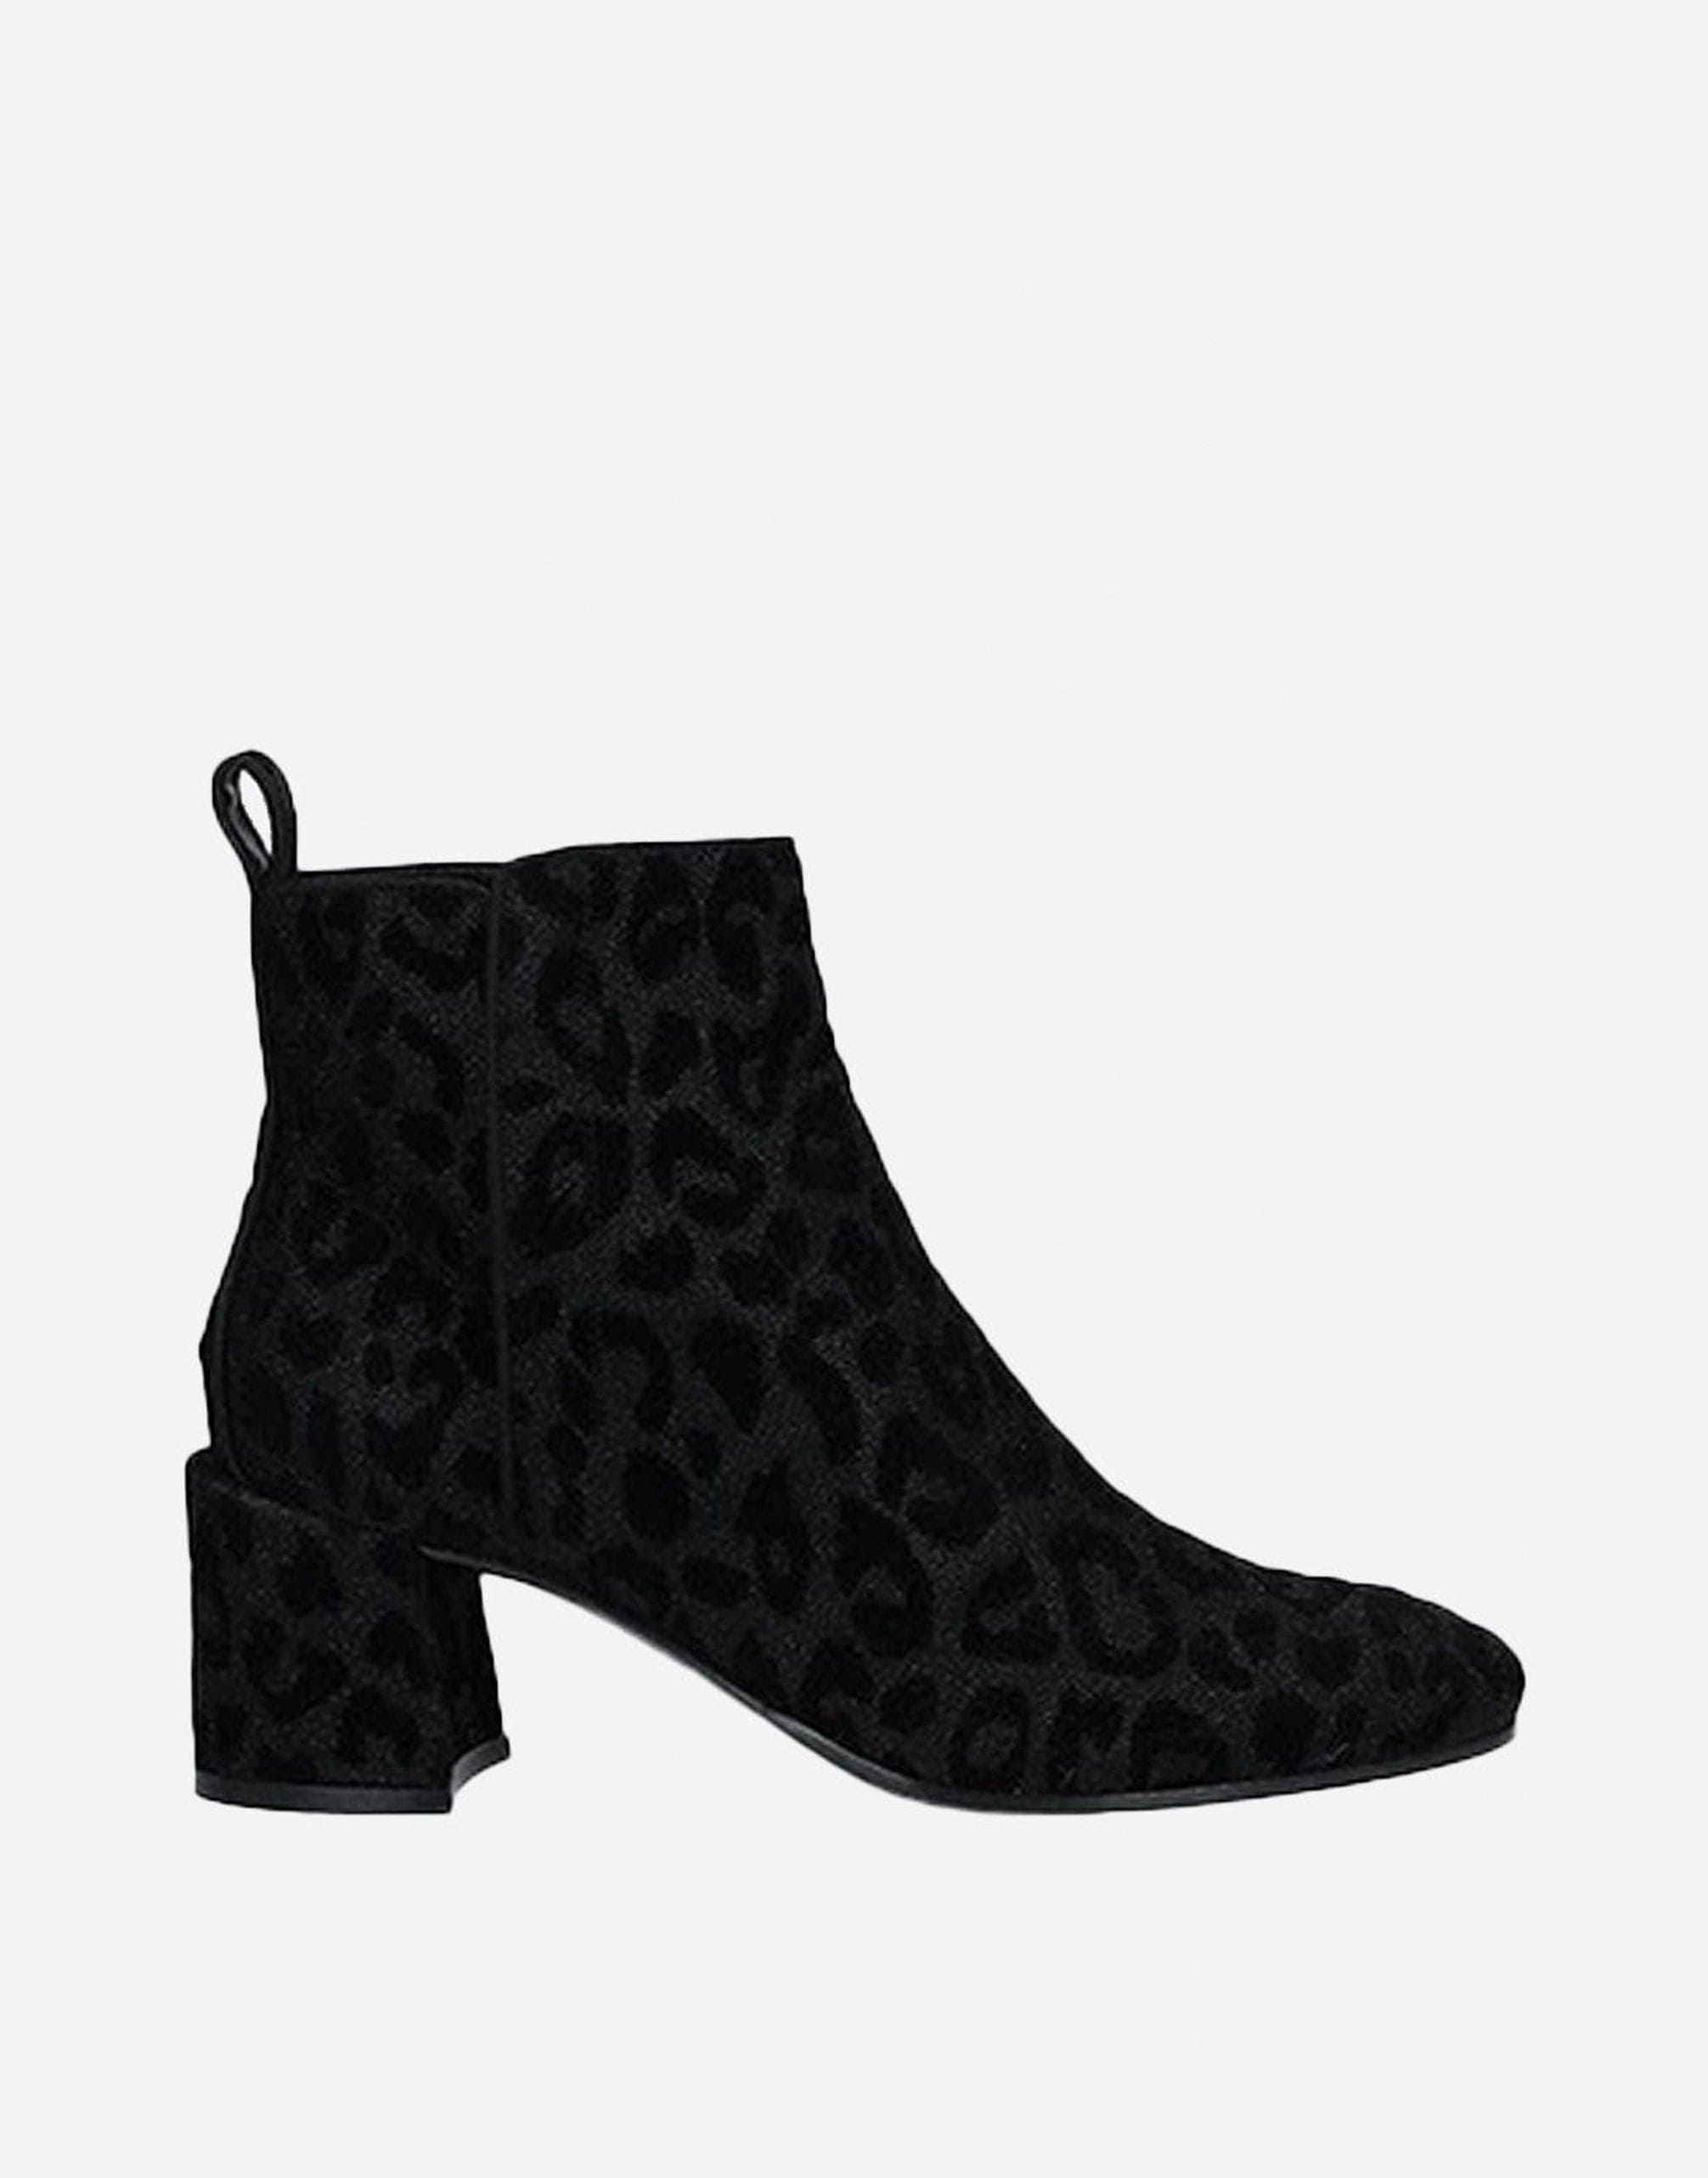 Dolce & Gabbana Leopard-Print Ankle Boots